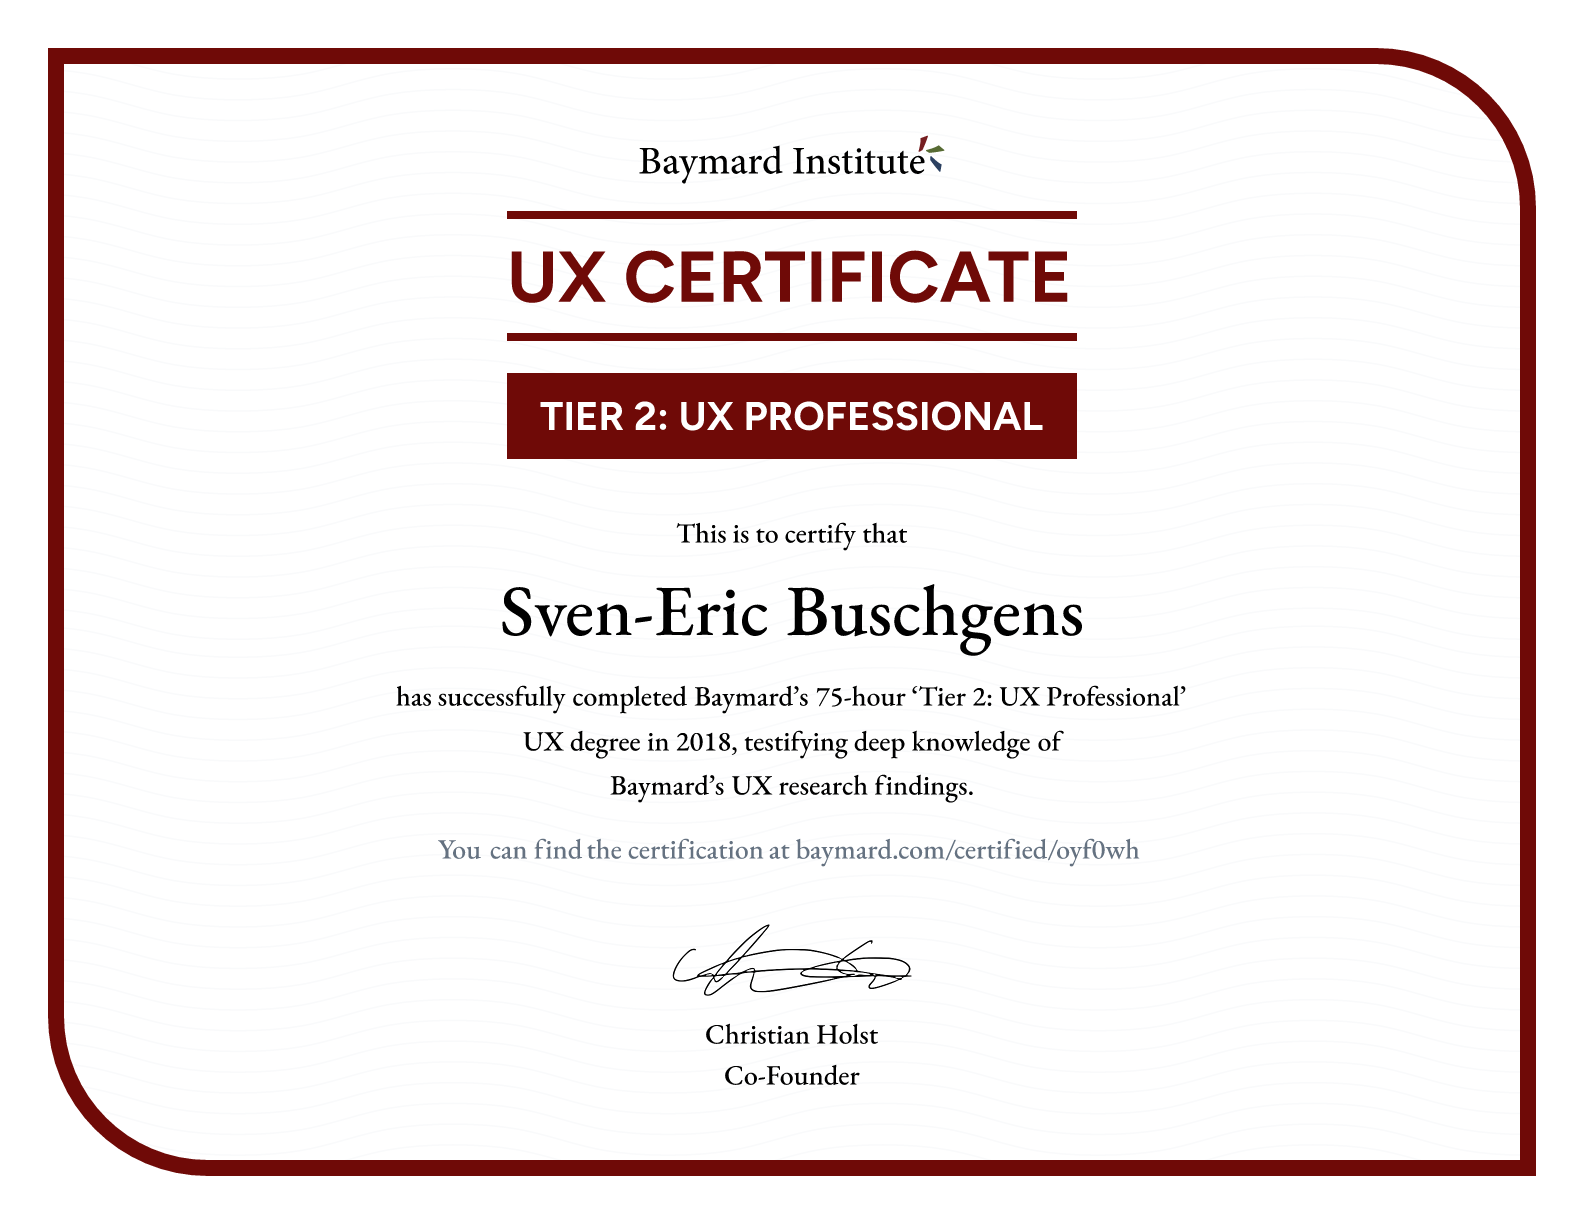 Sven-Eric Buschgens’s certificate